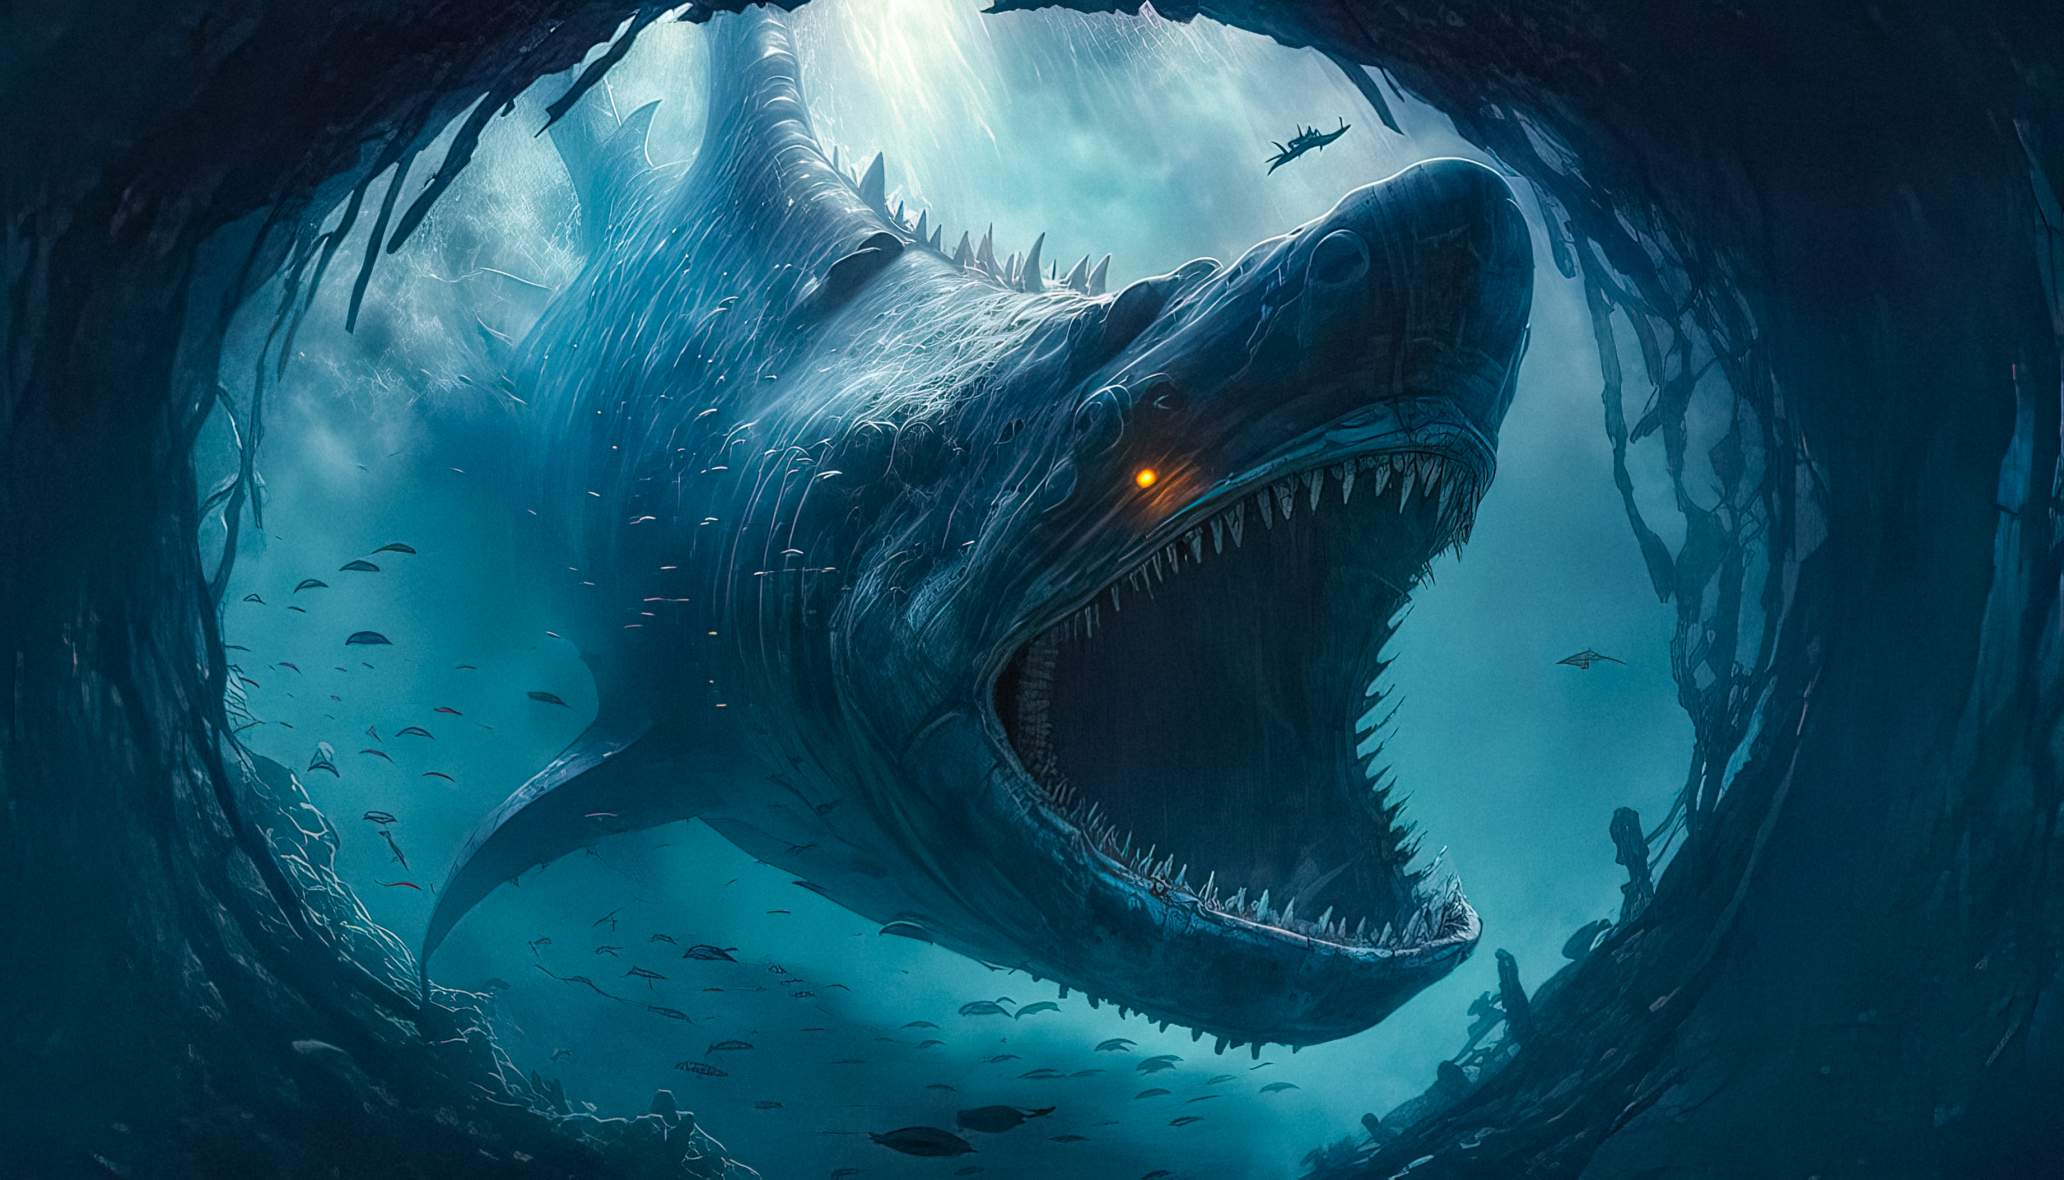 Leviathan: Imposible nga pildihon kining karaang mangtas sa dagat! 2